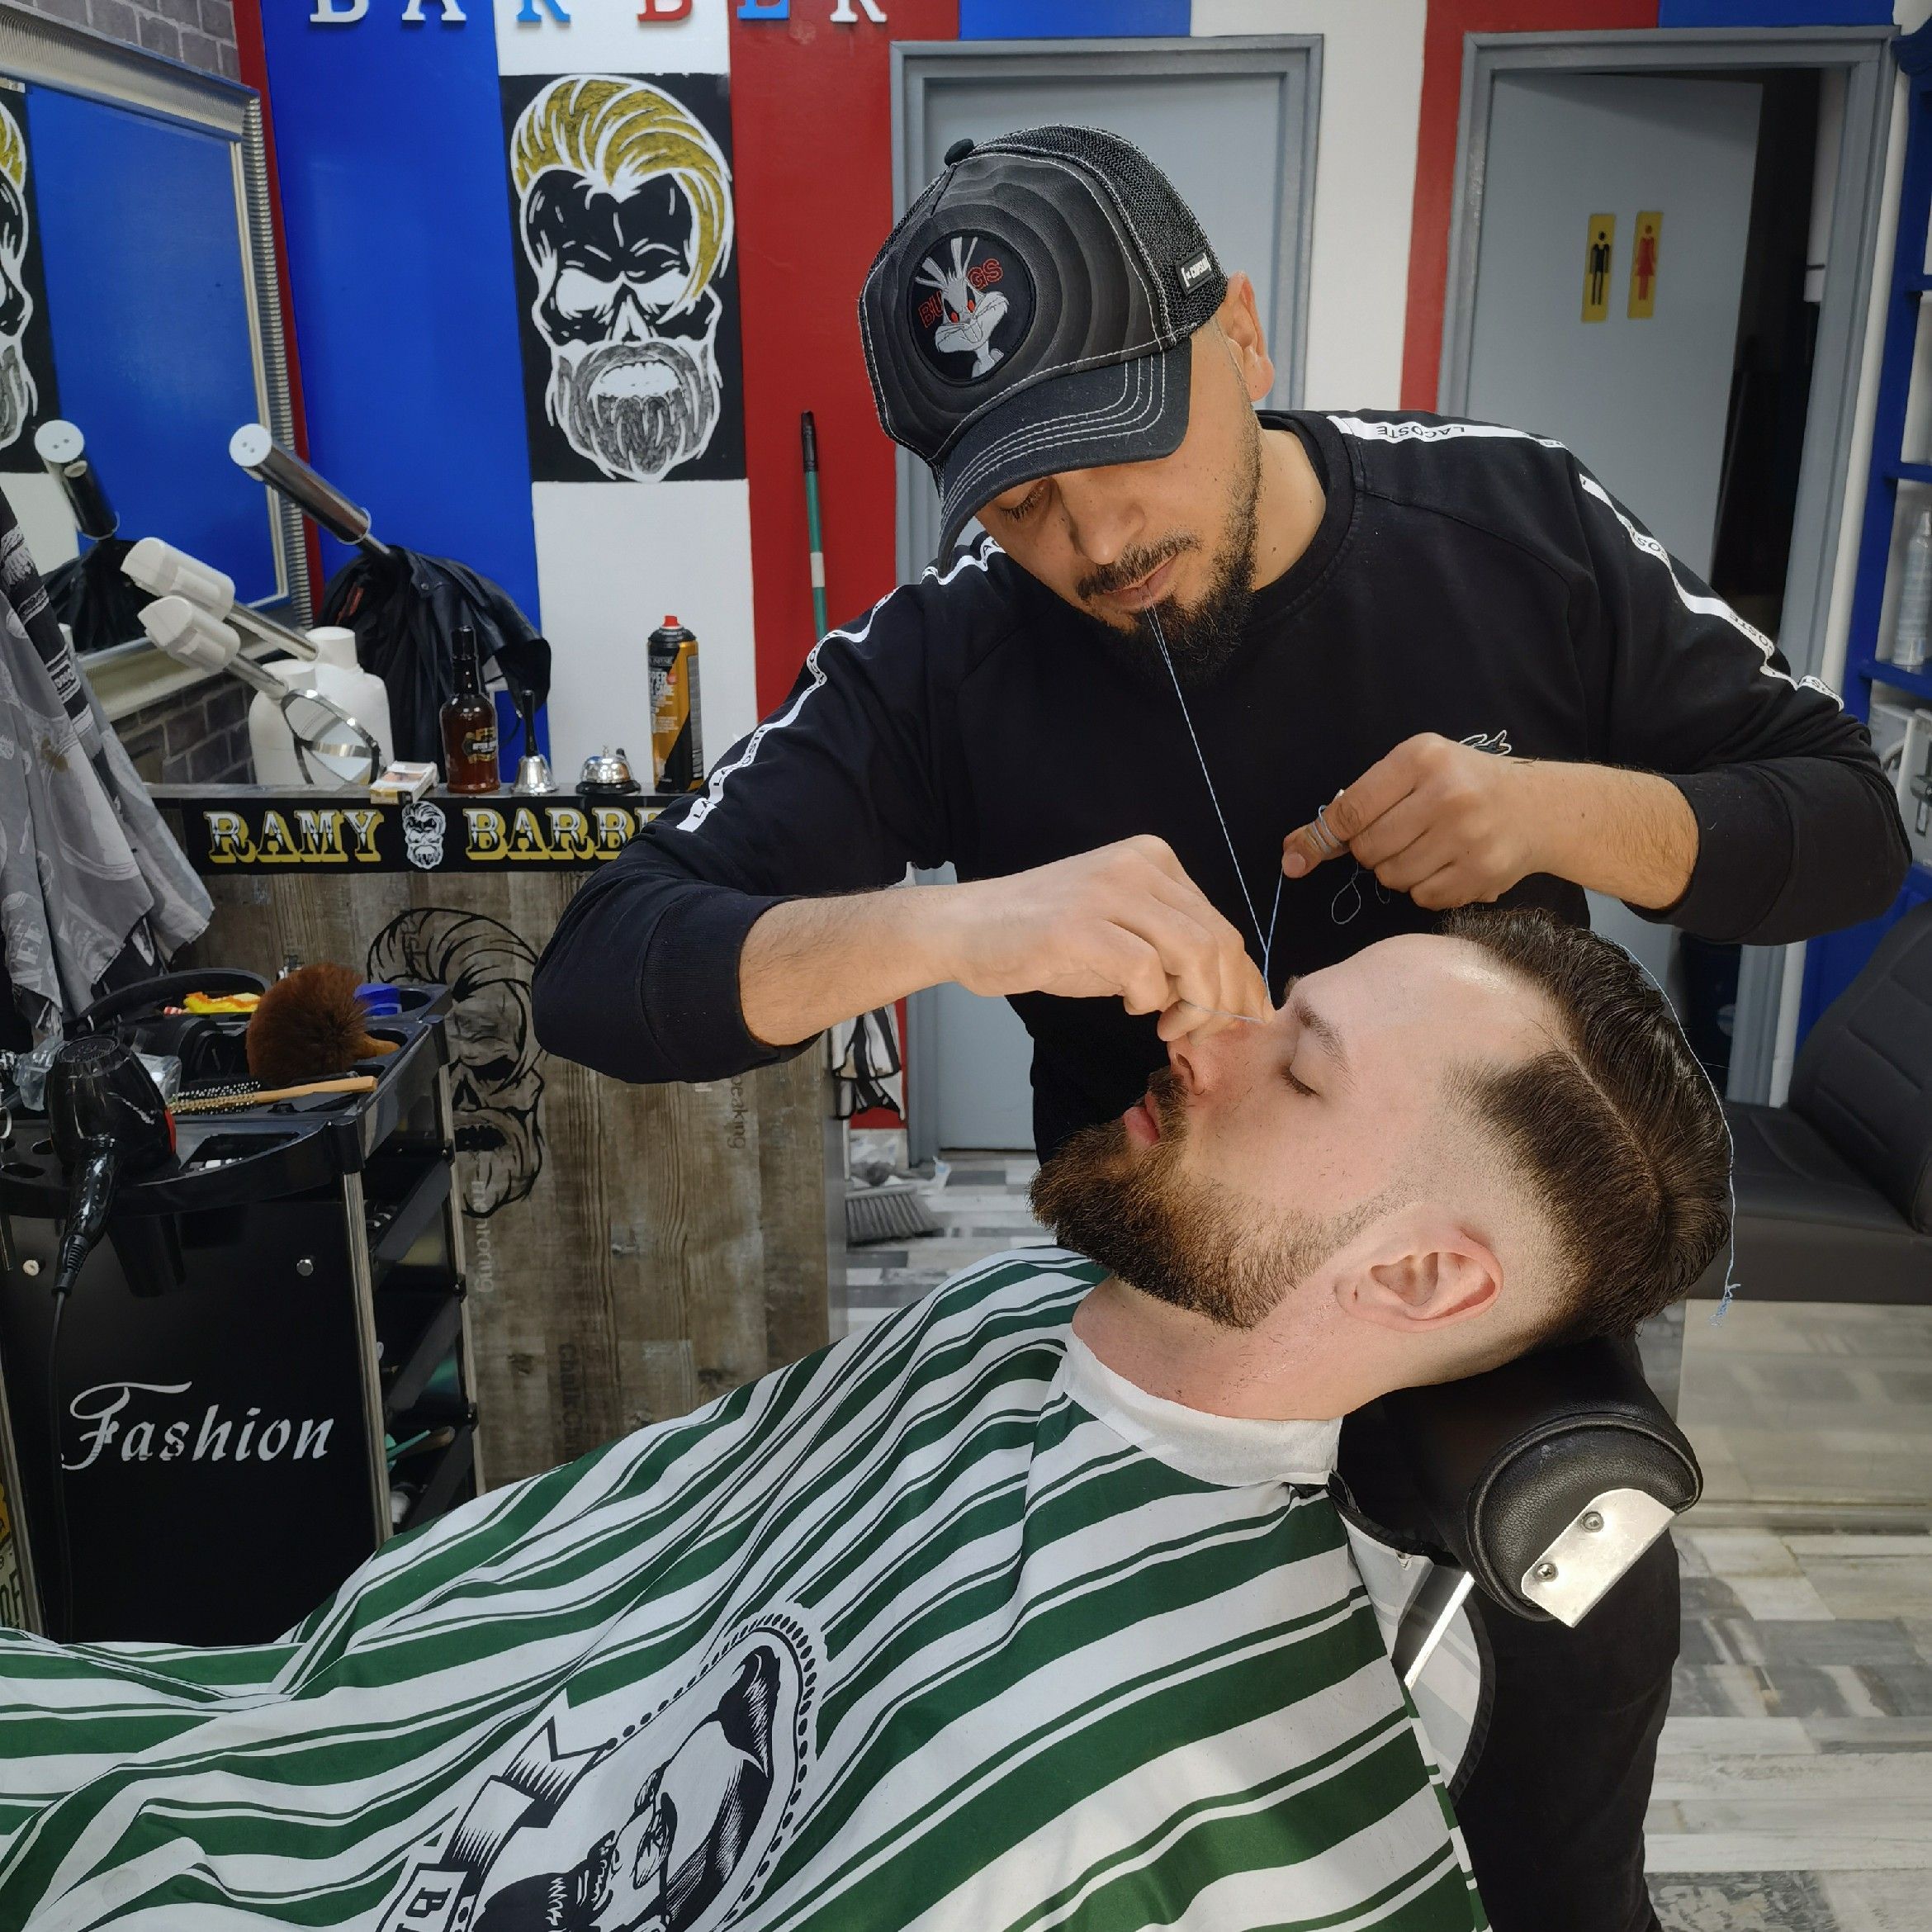 Ramy barber (2), Calle de Colomer, 11, Calle Colomer 11 local 4, 28028, Madrid